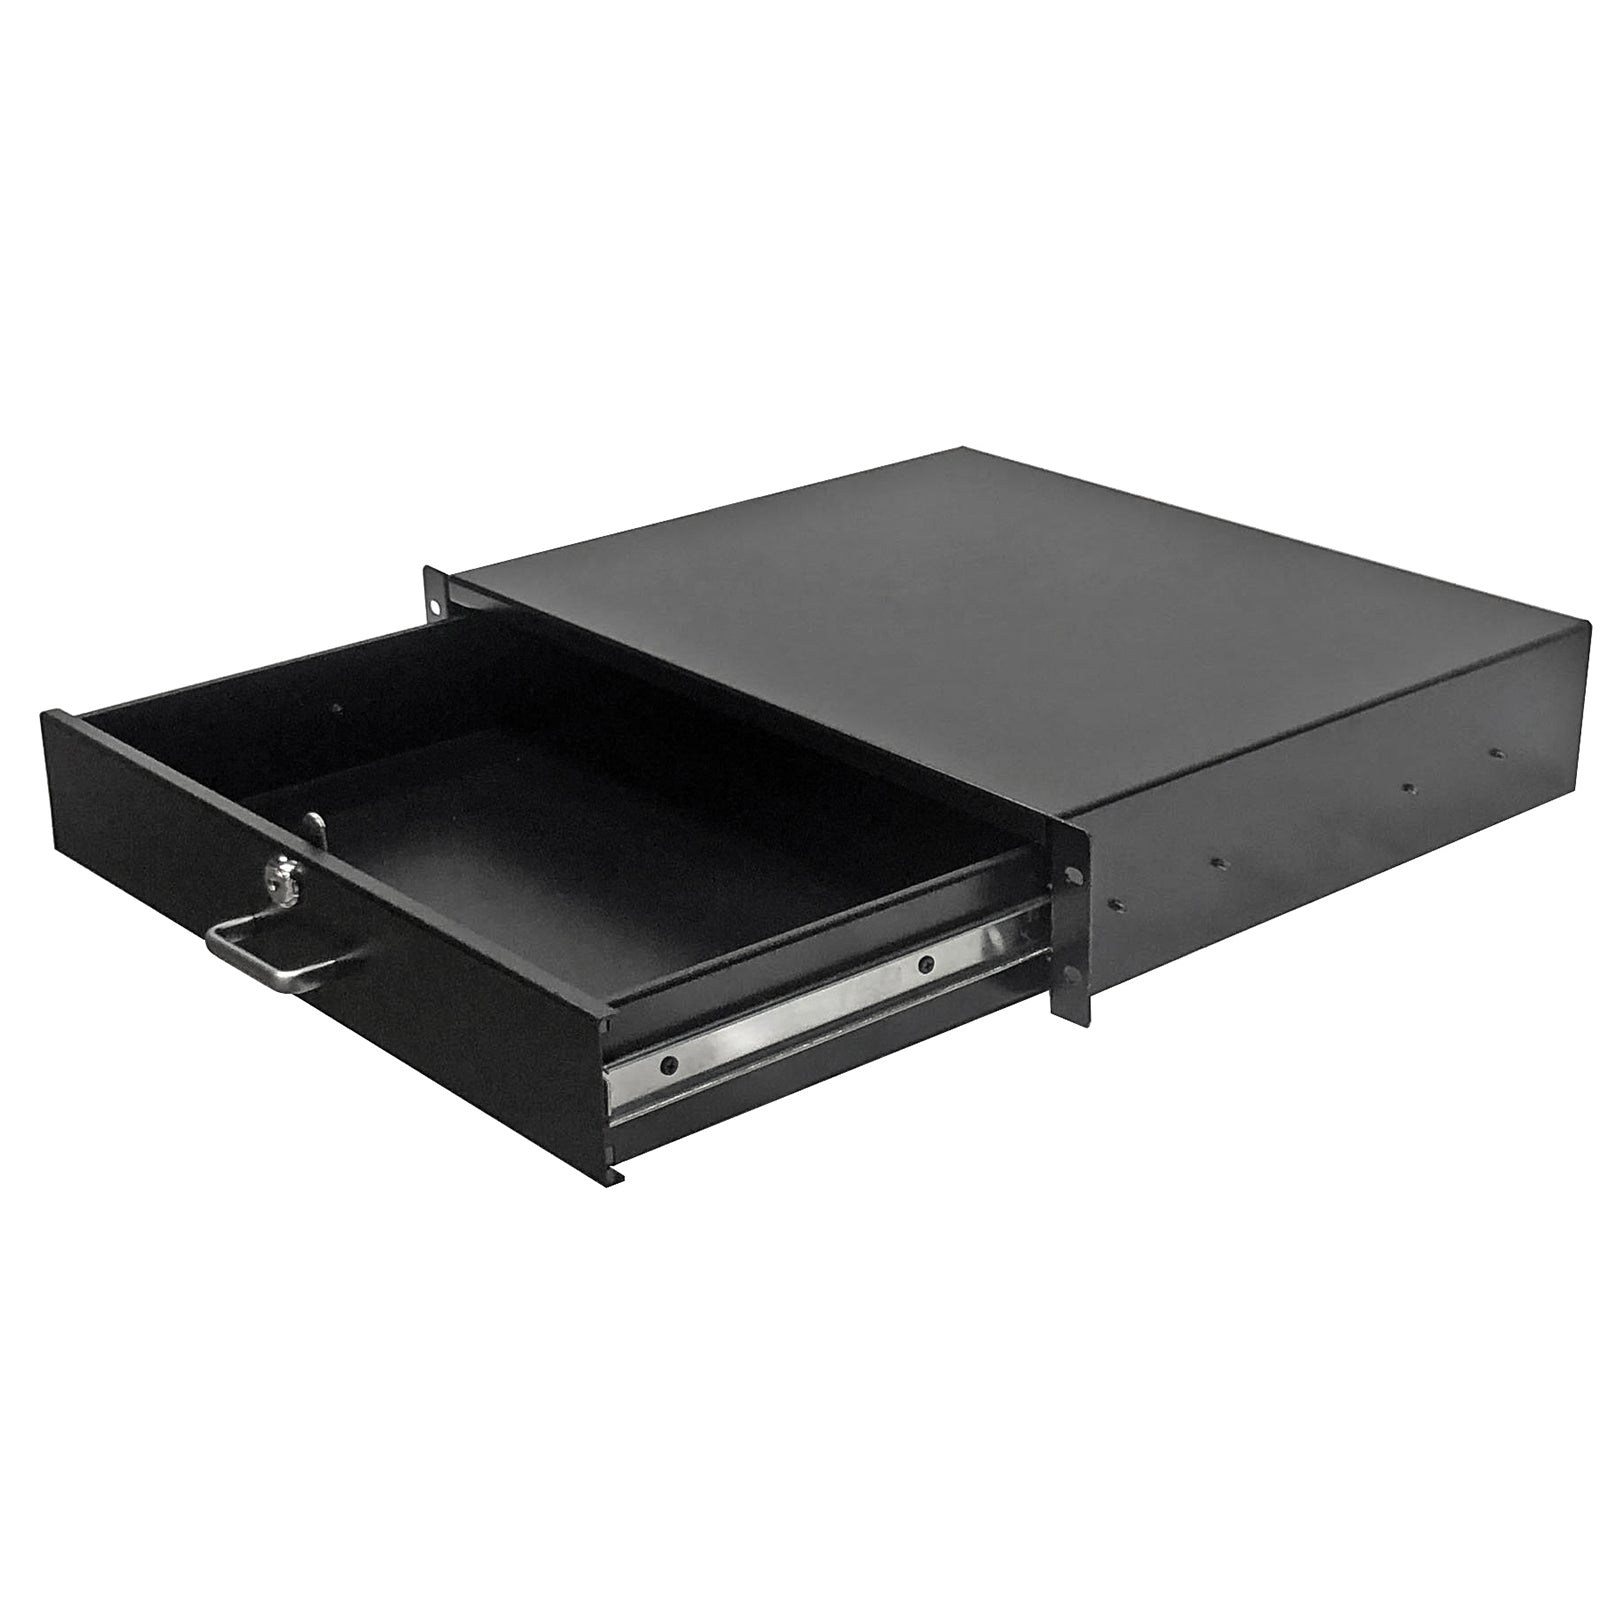 Aeons Premium 2U Rack Mount Sliding Drawer, Server Storage Cabinet Case with Lock